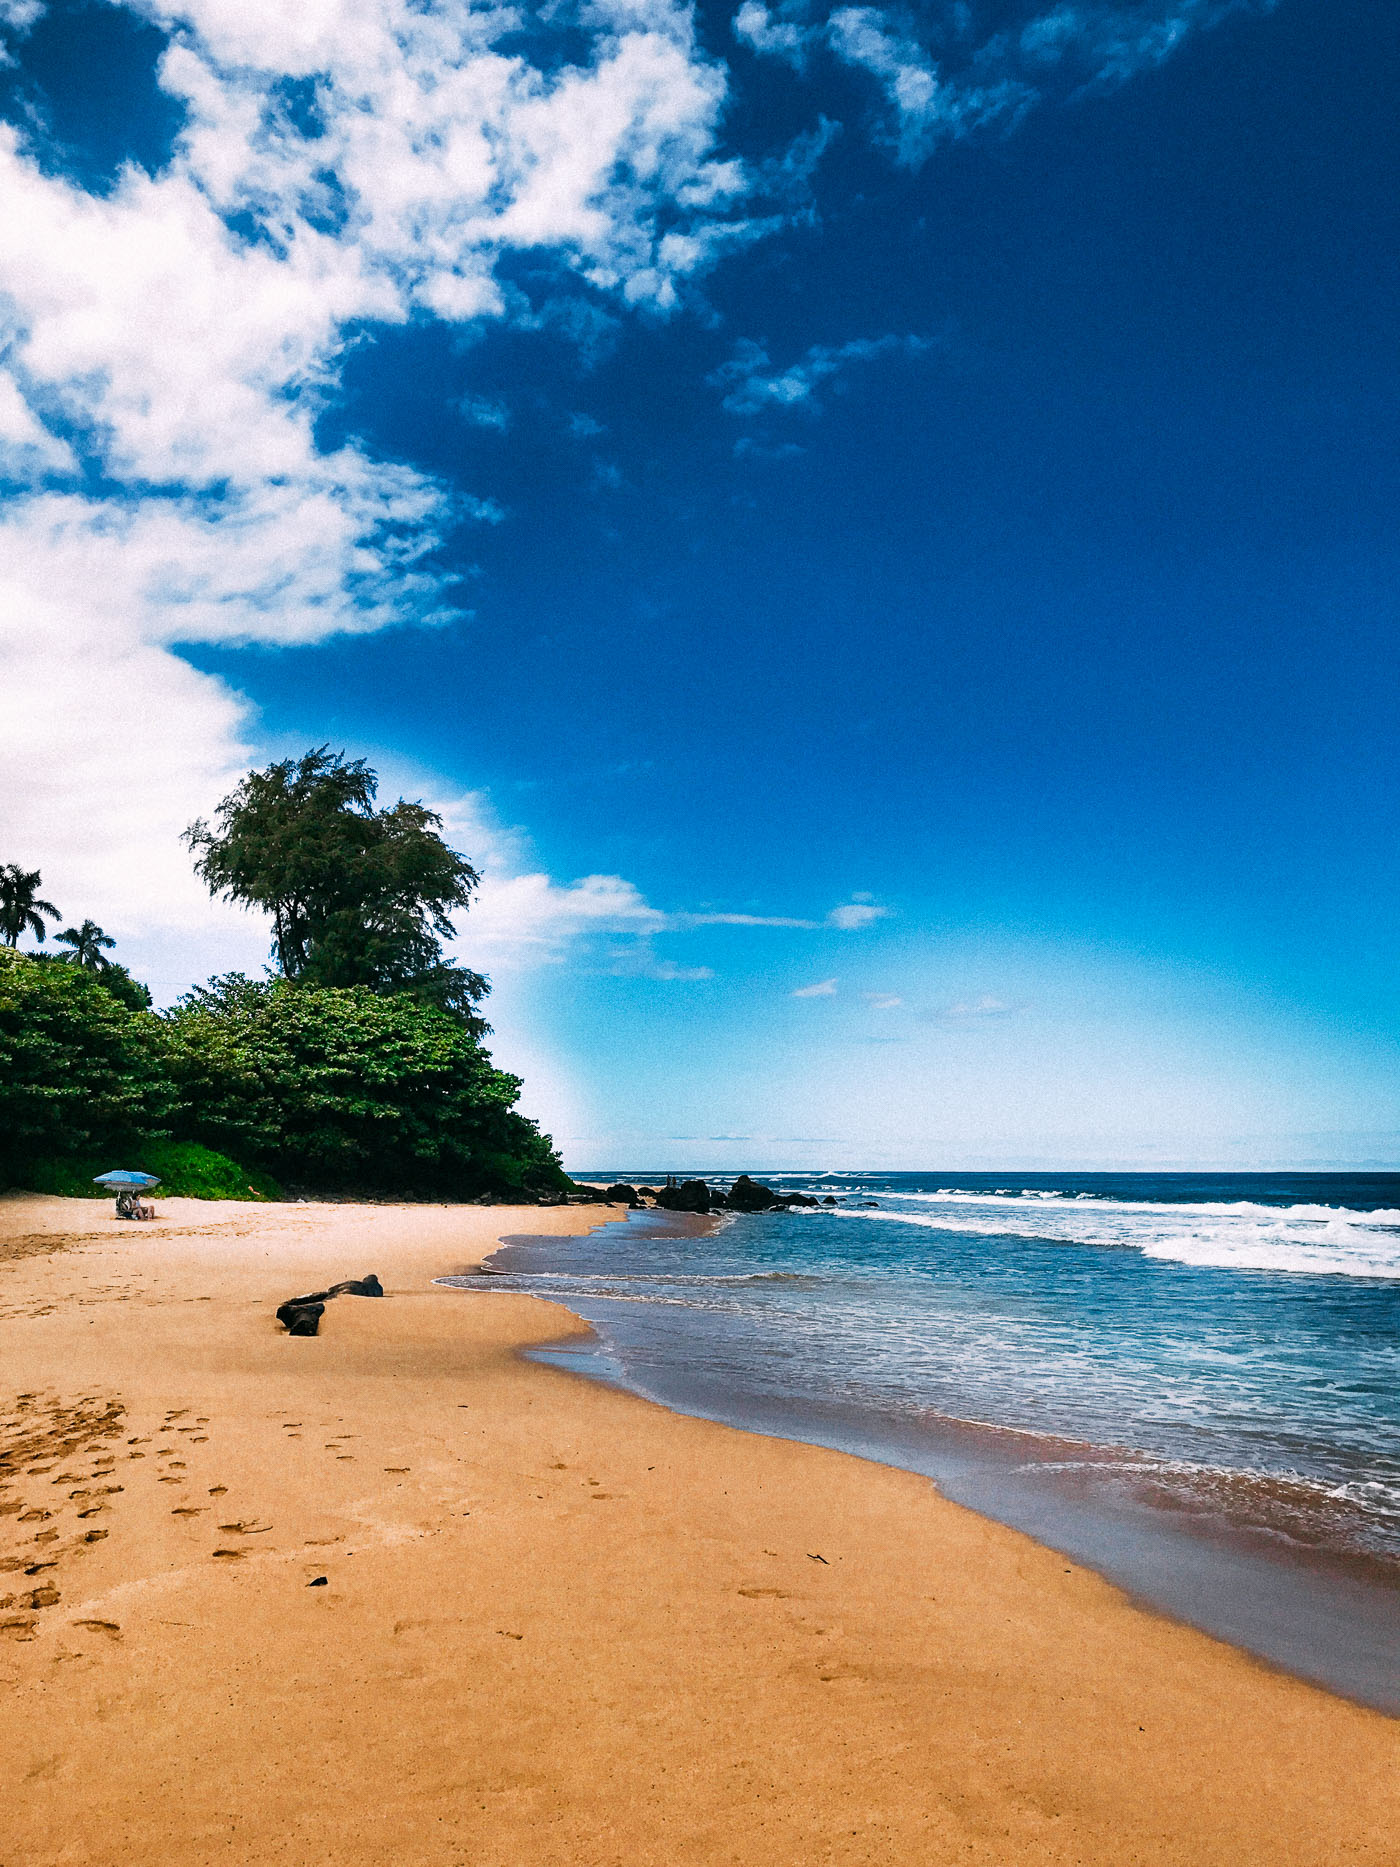 Tropical beach with ocean views and blue sky